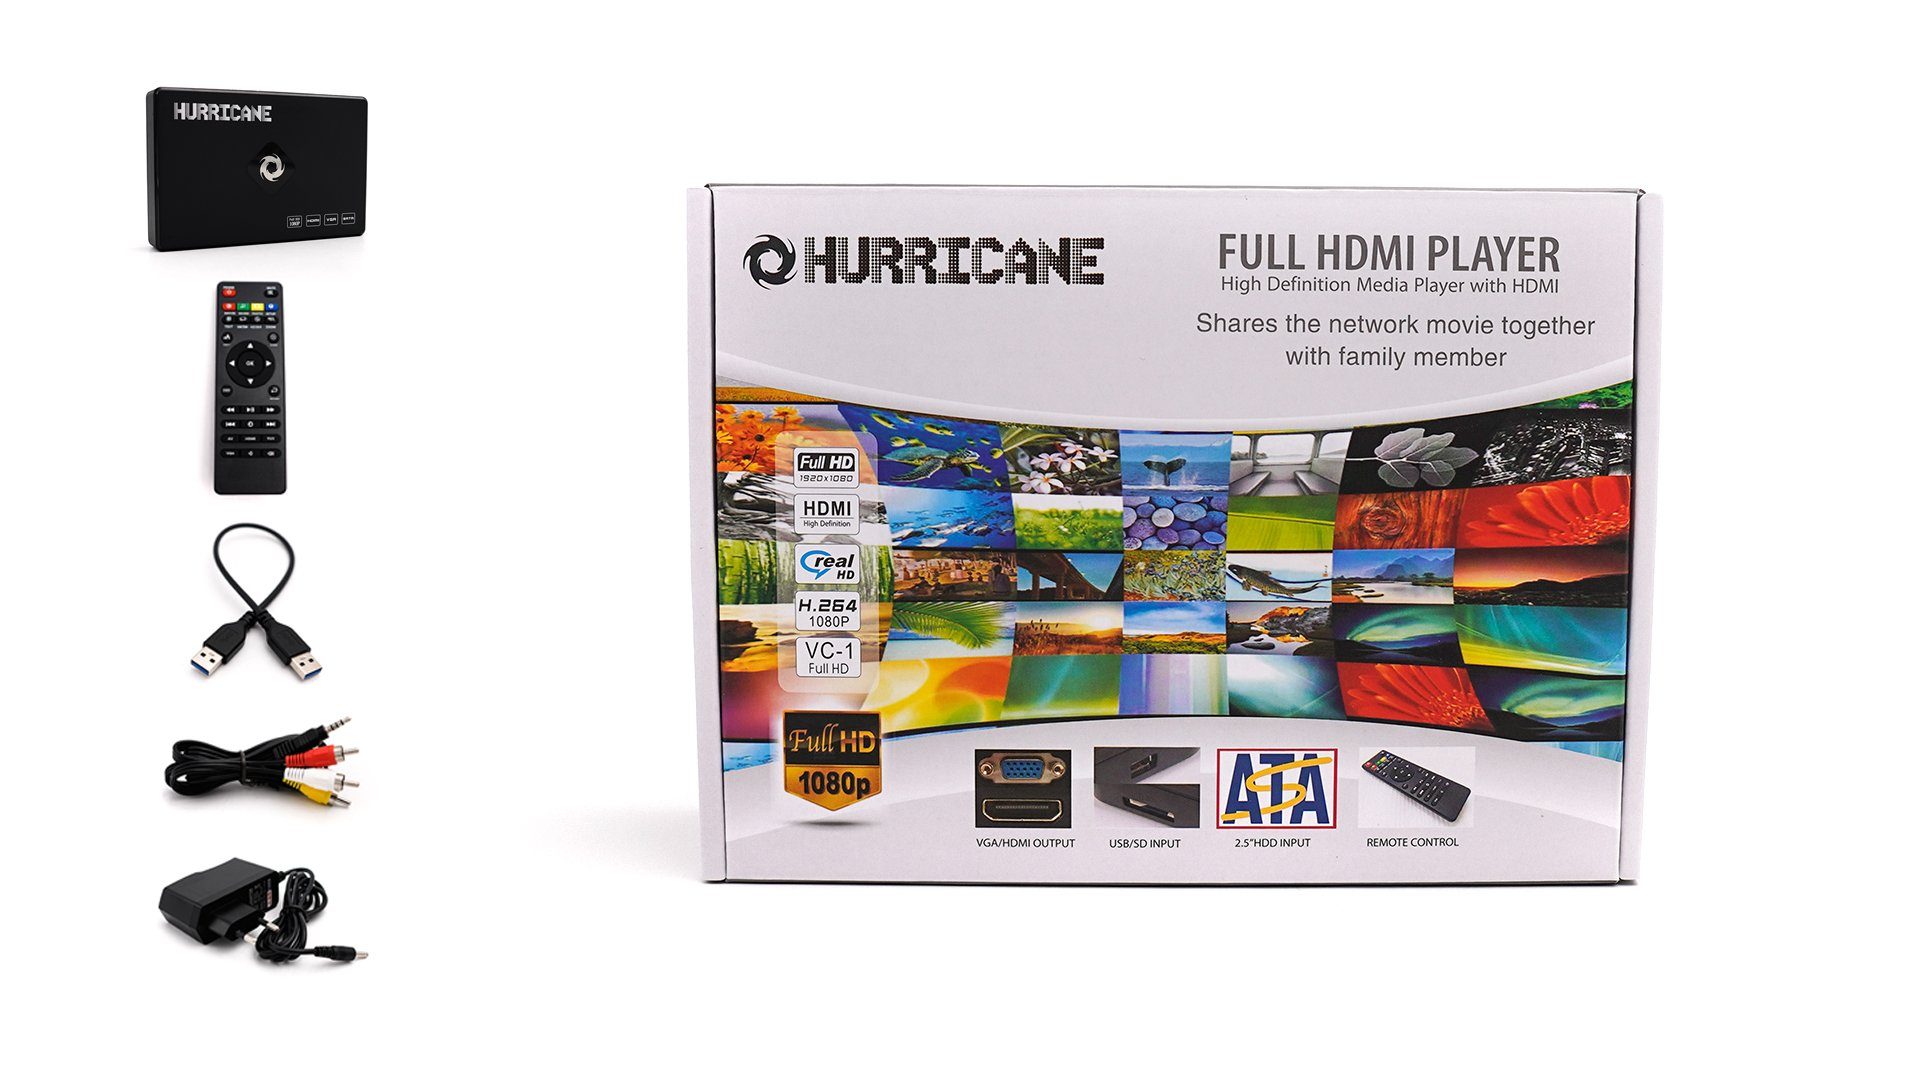 120GB HD Multi-Langu HDMI Streaming-Box HURRICANE Hurricane Media Full Player (1920*1080) HDD